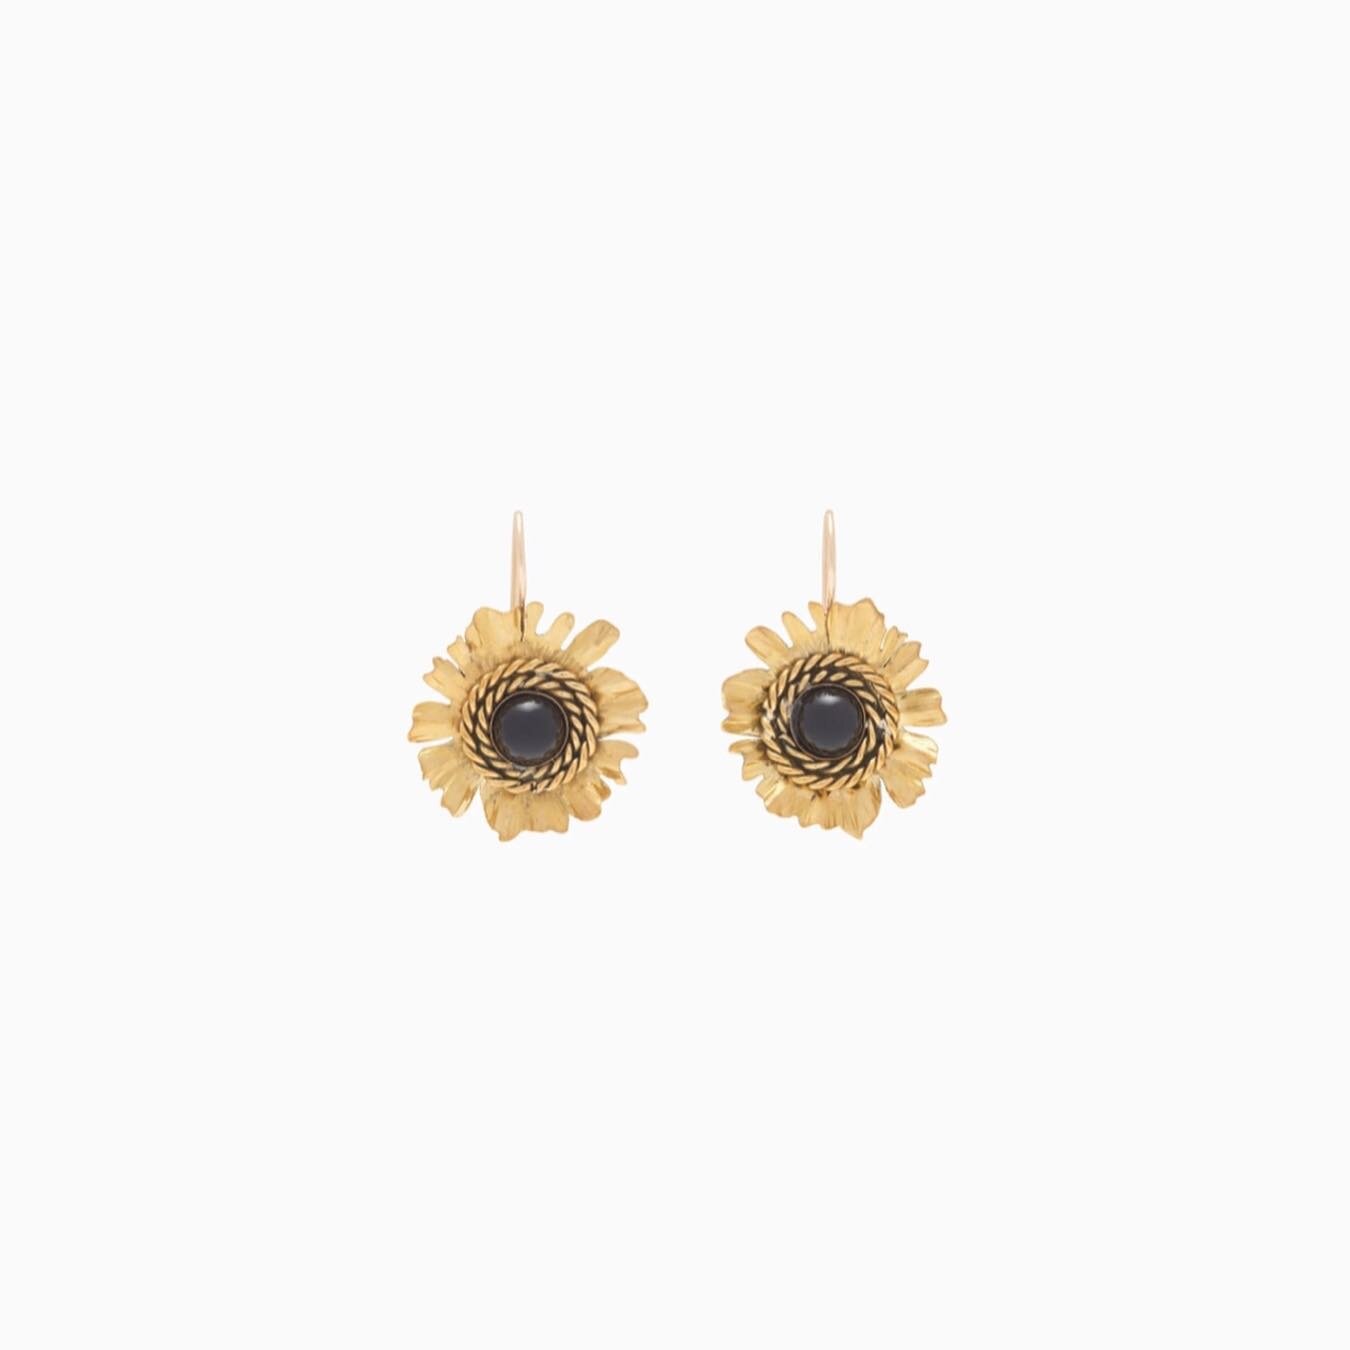 New earrings 🌼 from @ullajohnson 

📍 @galeriastiffany 

#newin #bellabella #fashion #clothing #sneakers #coolfashion #guatemala #gt #bellabellagt #fashiostylist #ragandbone #zadigetvoltaire #ullajohnson #rails #women #fashionistawomen #style #influ